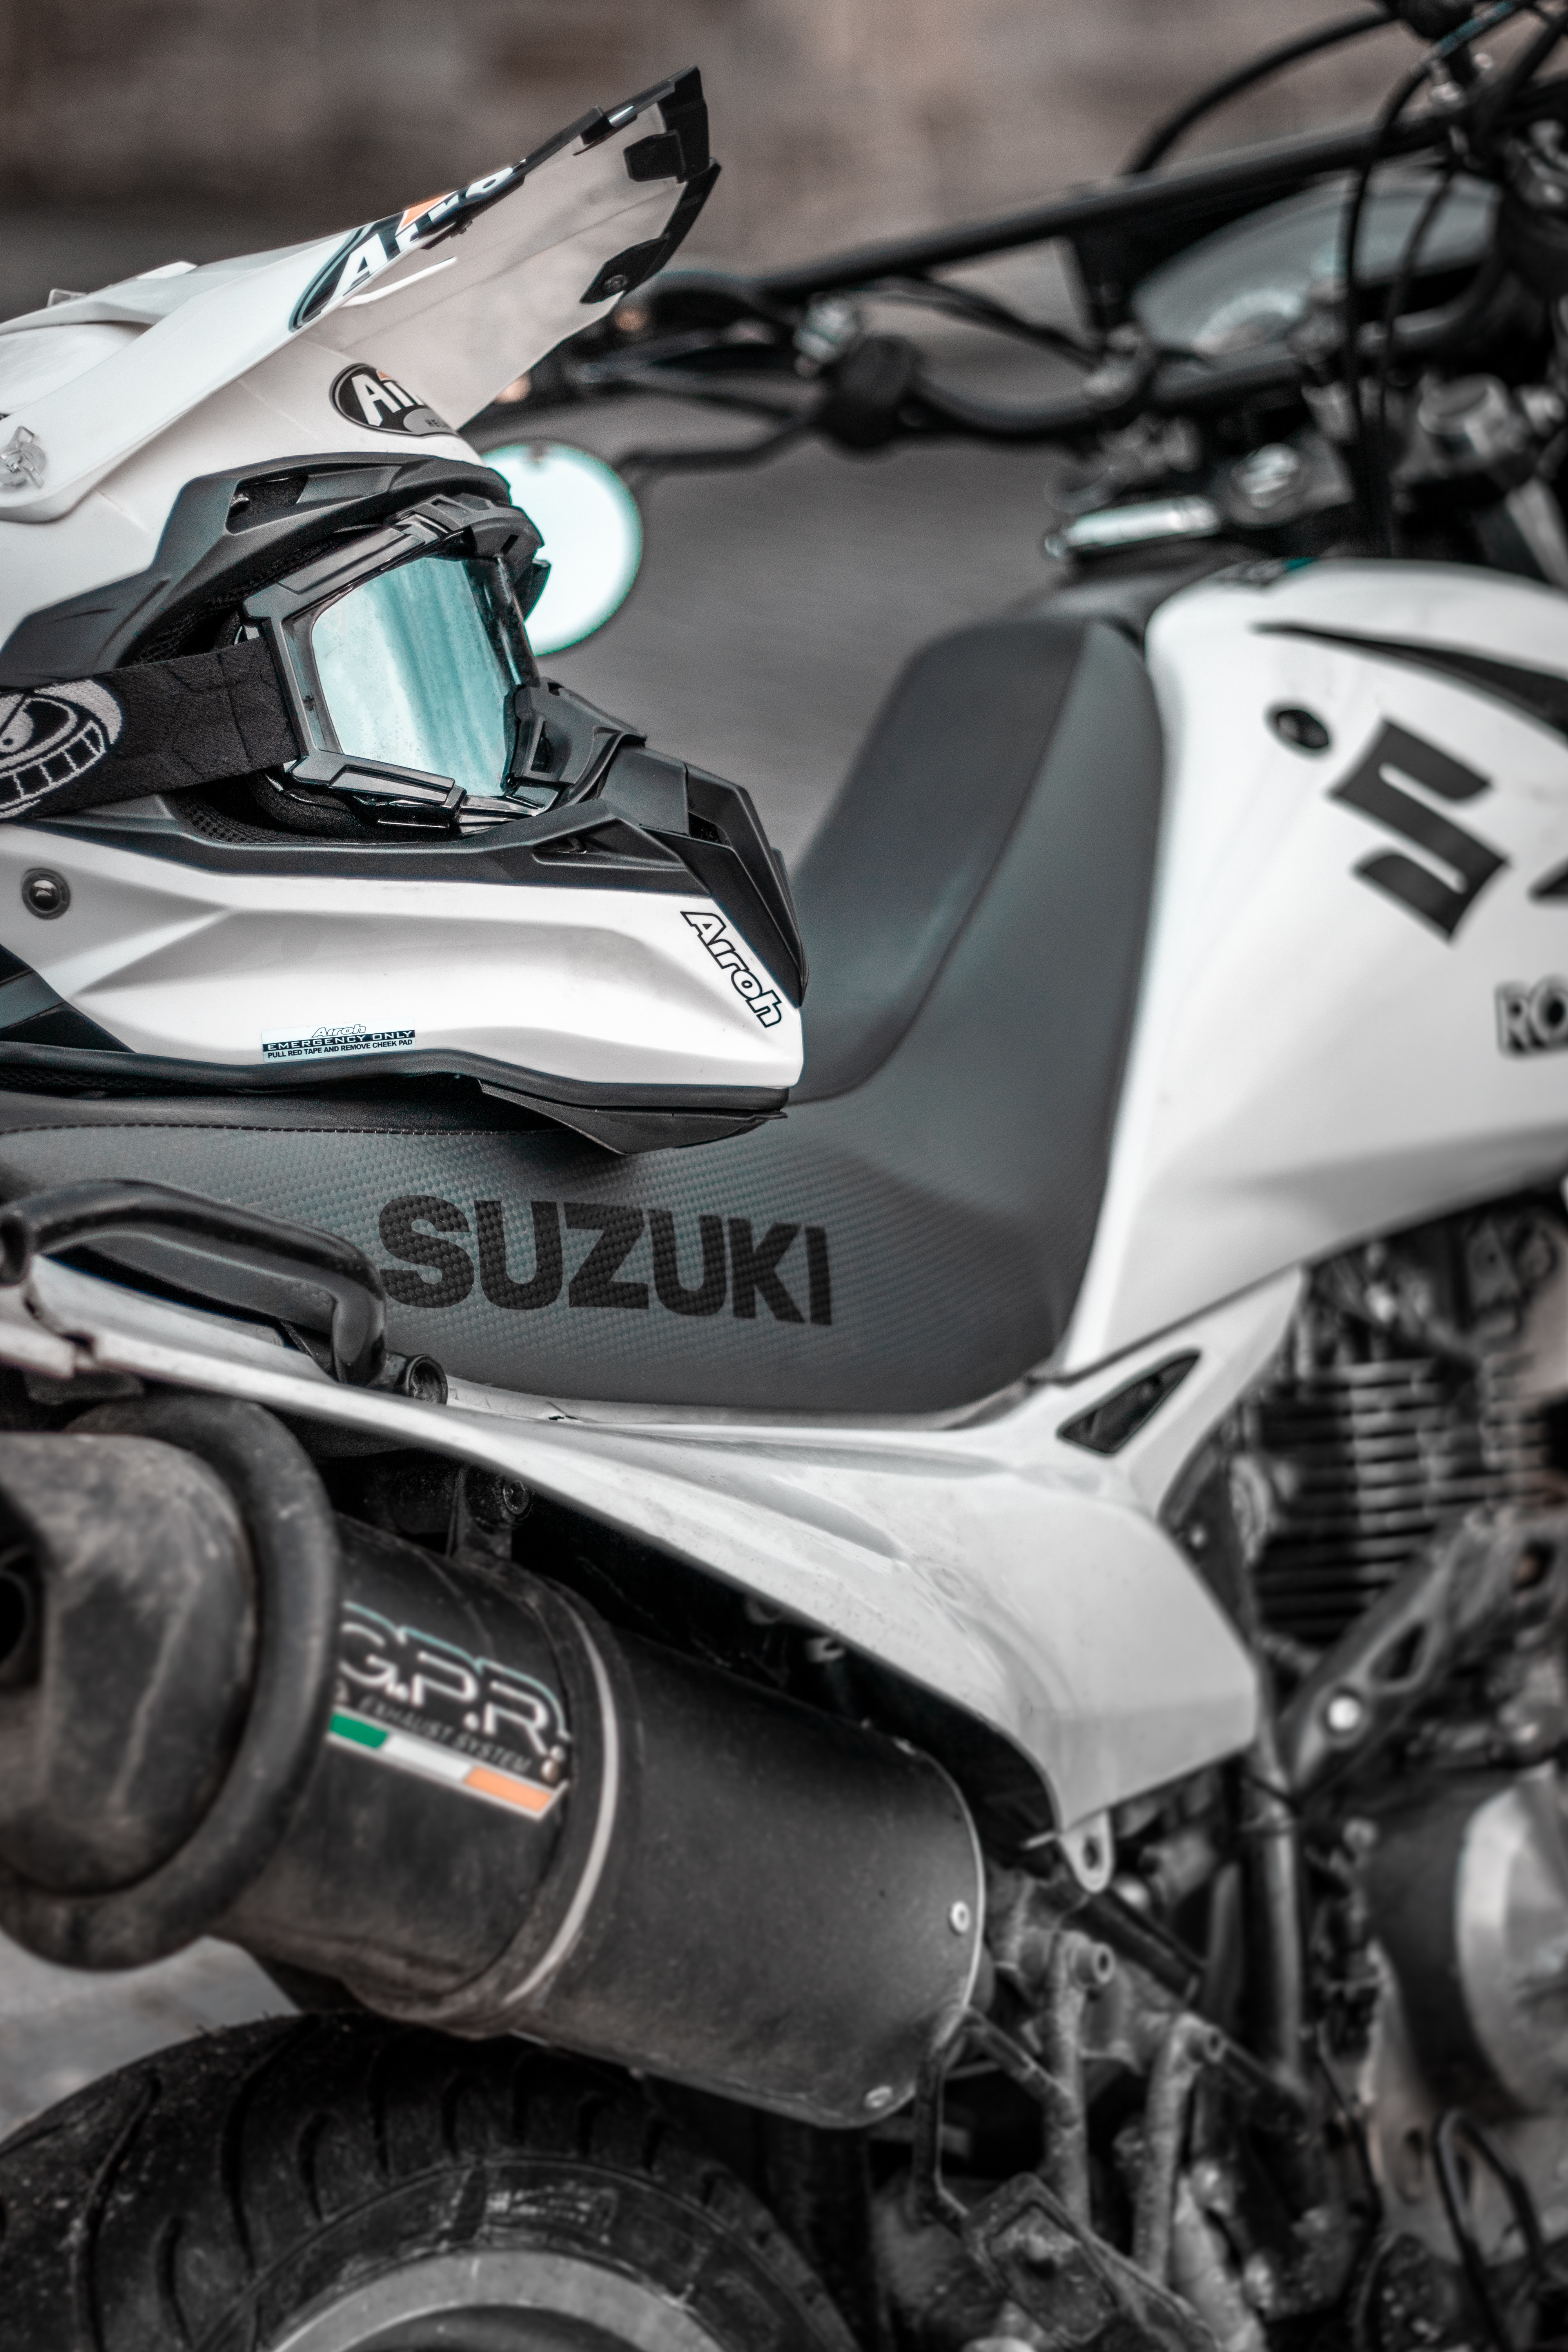 suzuki, bike, motorcycles, helmet, motorcycle